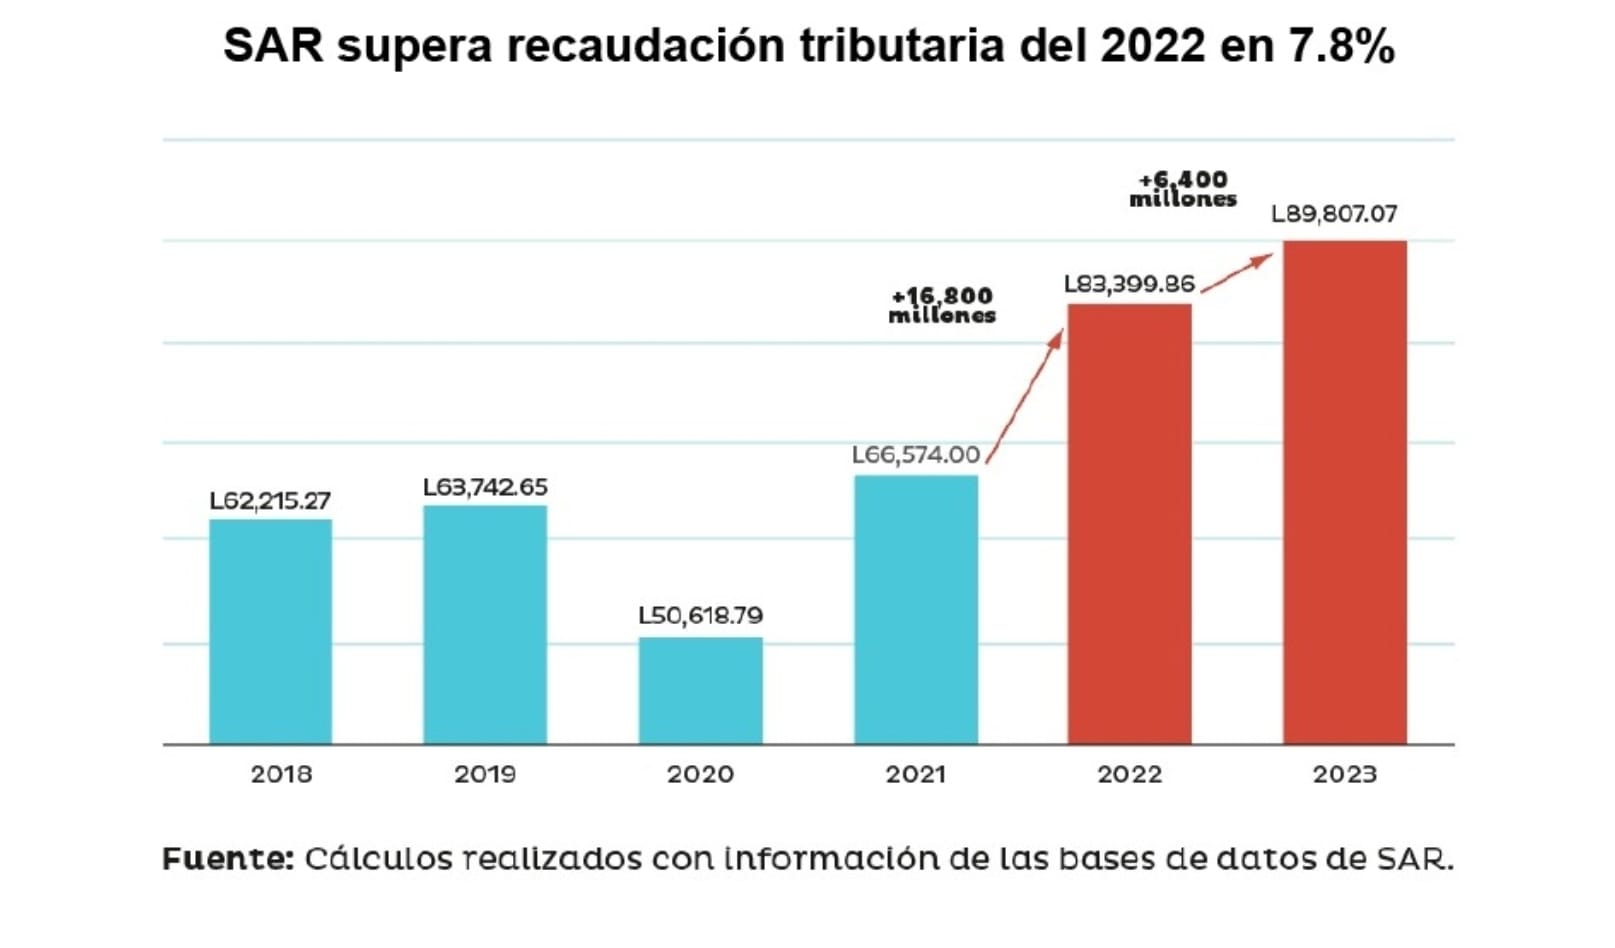 SAR supera recaudación tributaria de 2022 en 7.8% en relación a 2023